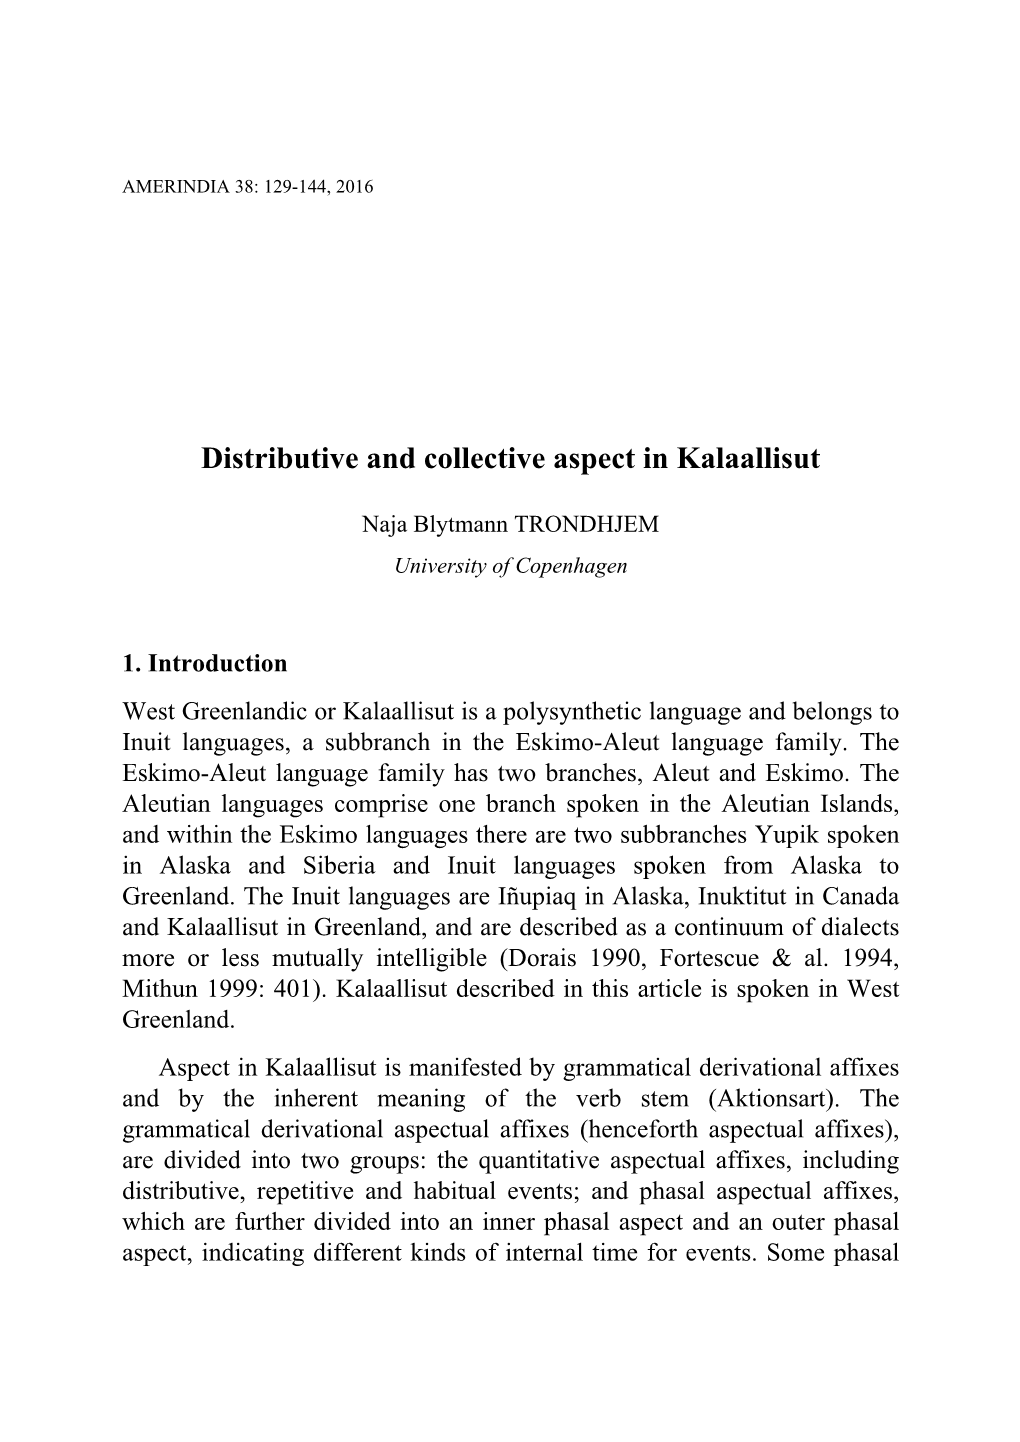 Distributive and Collective Aspect in Kalaallisut